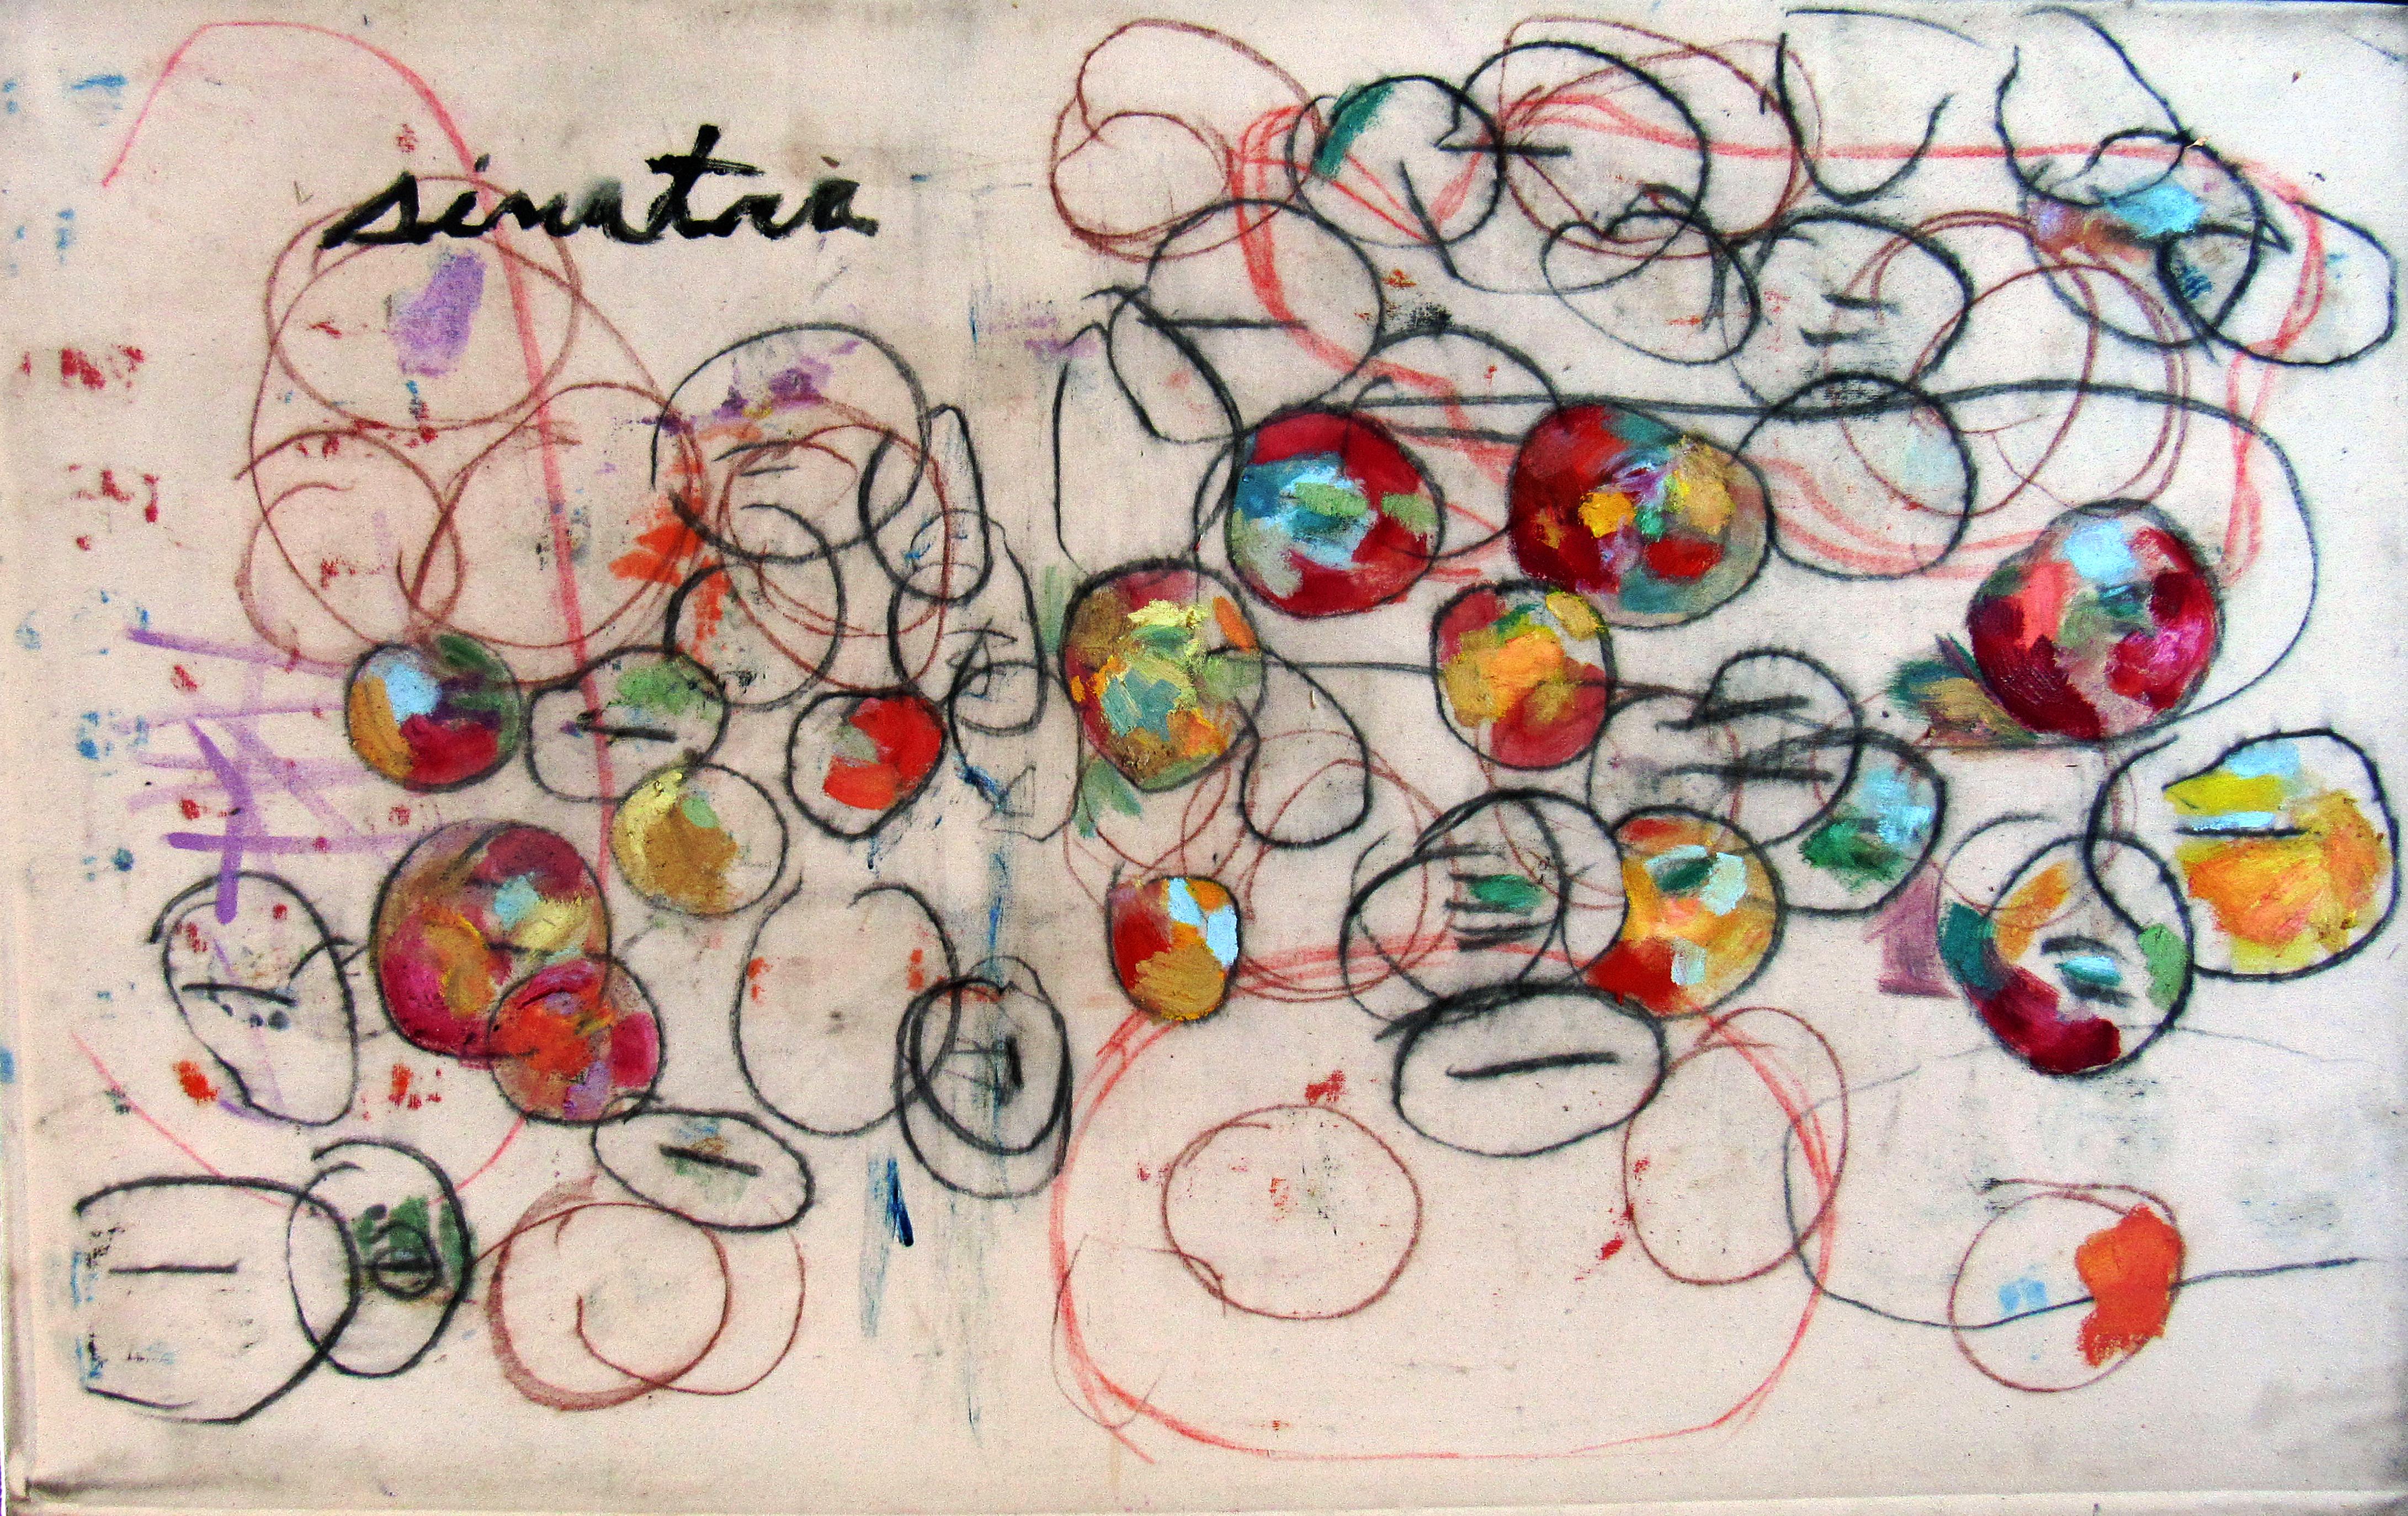 Sinatra & Ava Gardner, colorful circular patterns on neutral ground